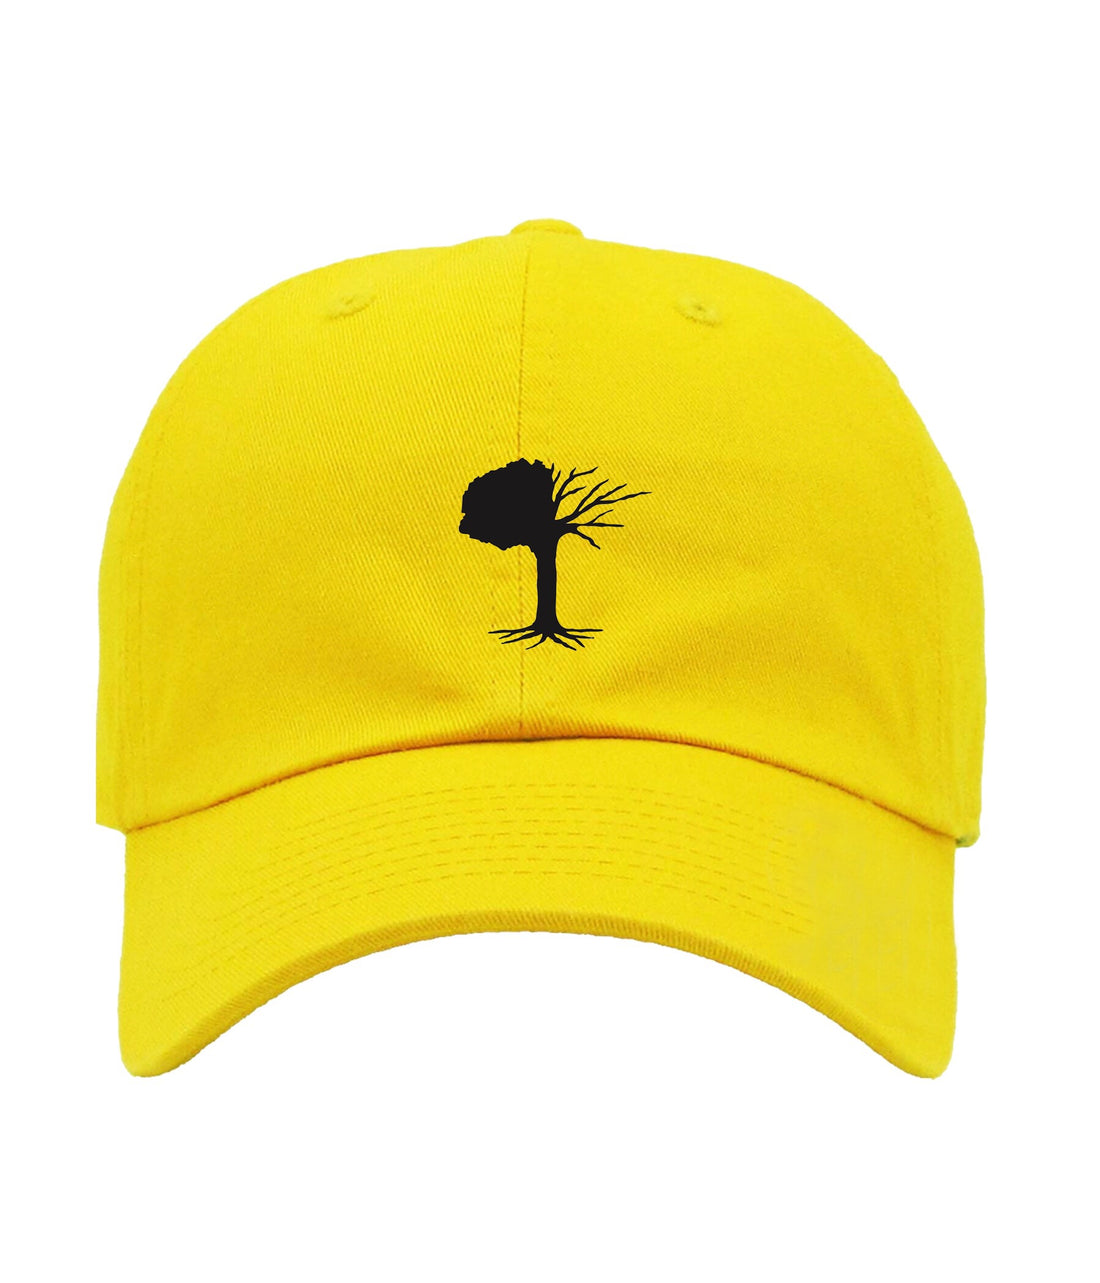 STEM Classic Sports Cap (Yellow) - STEM Clothing Group